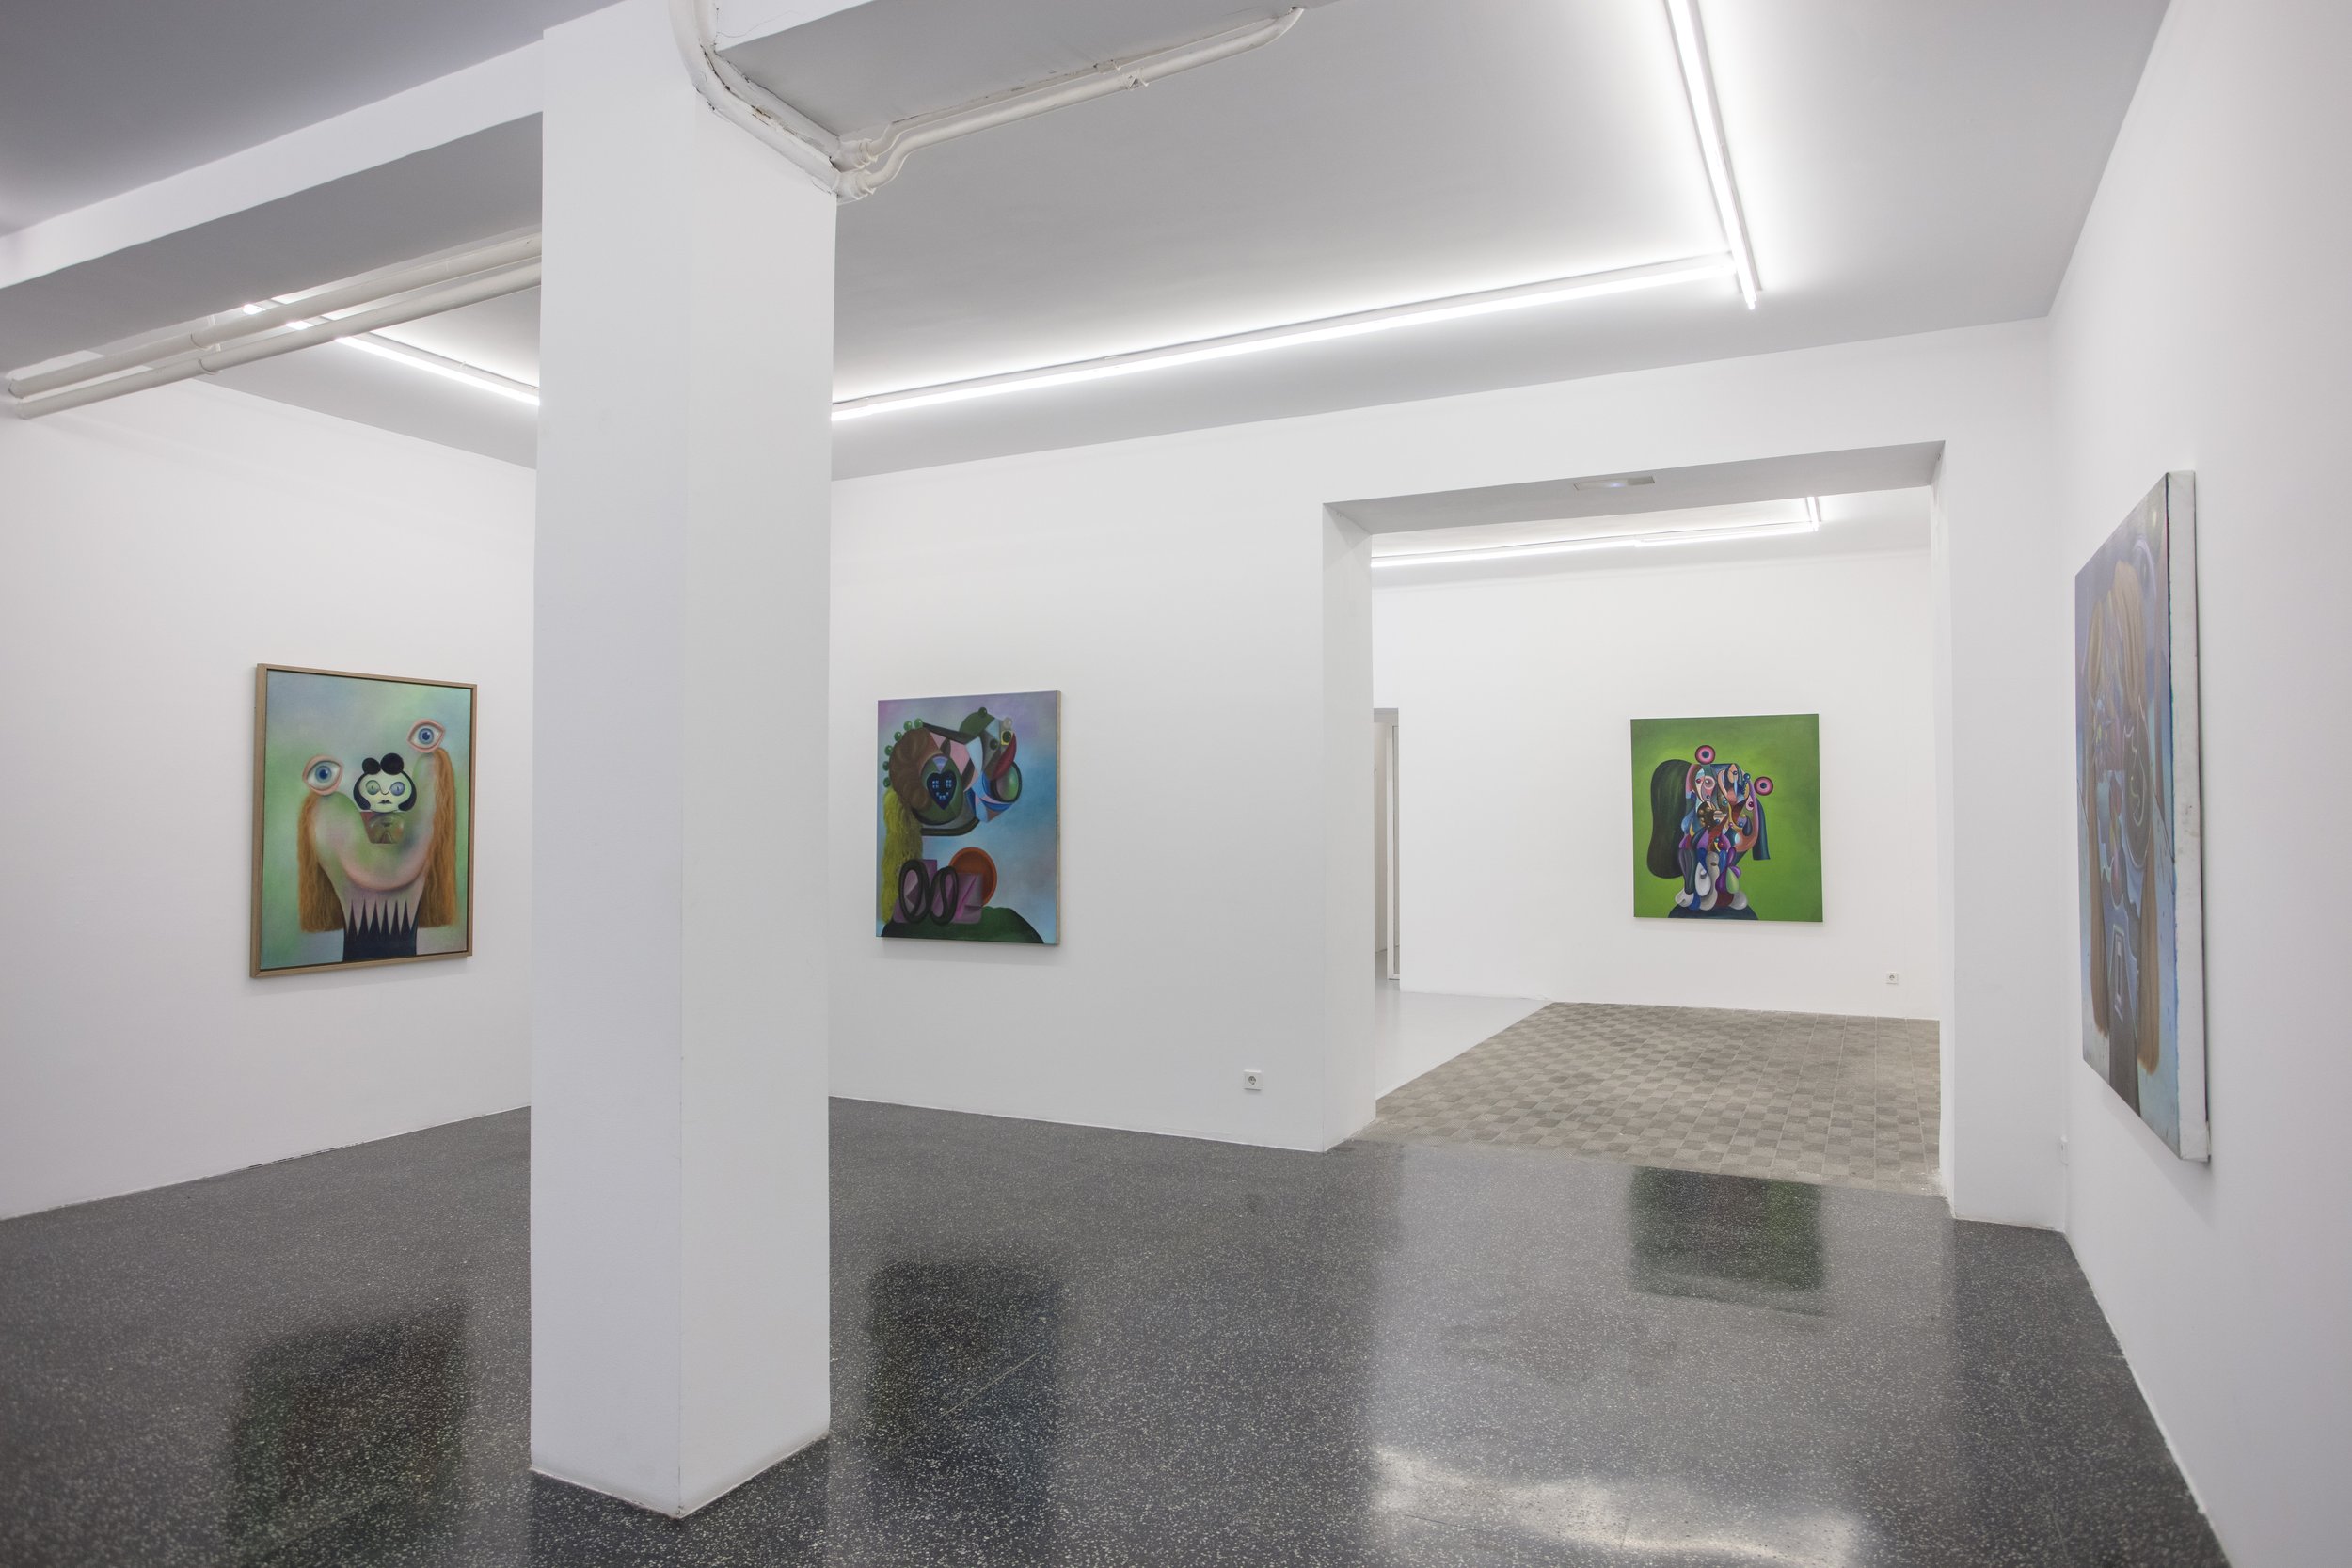  Installation View      “Hall of Mirrors"     2021-2022 Galeria Marta Cervera. Madrid  